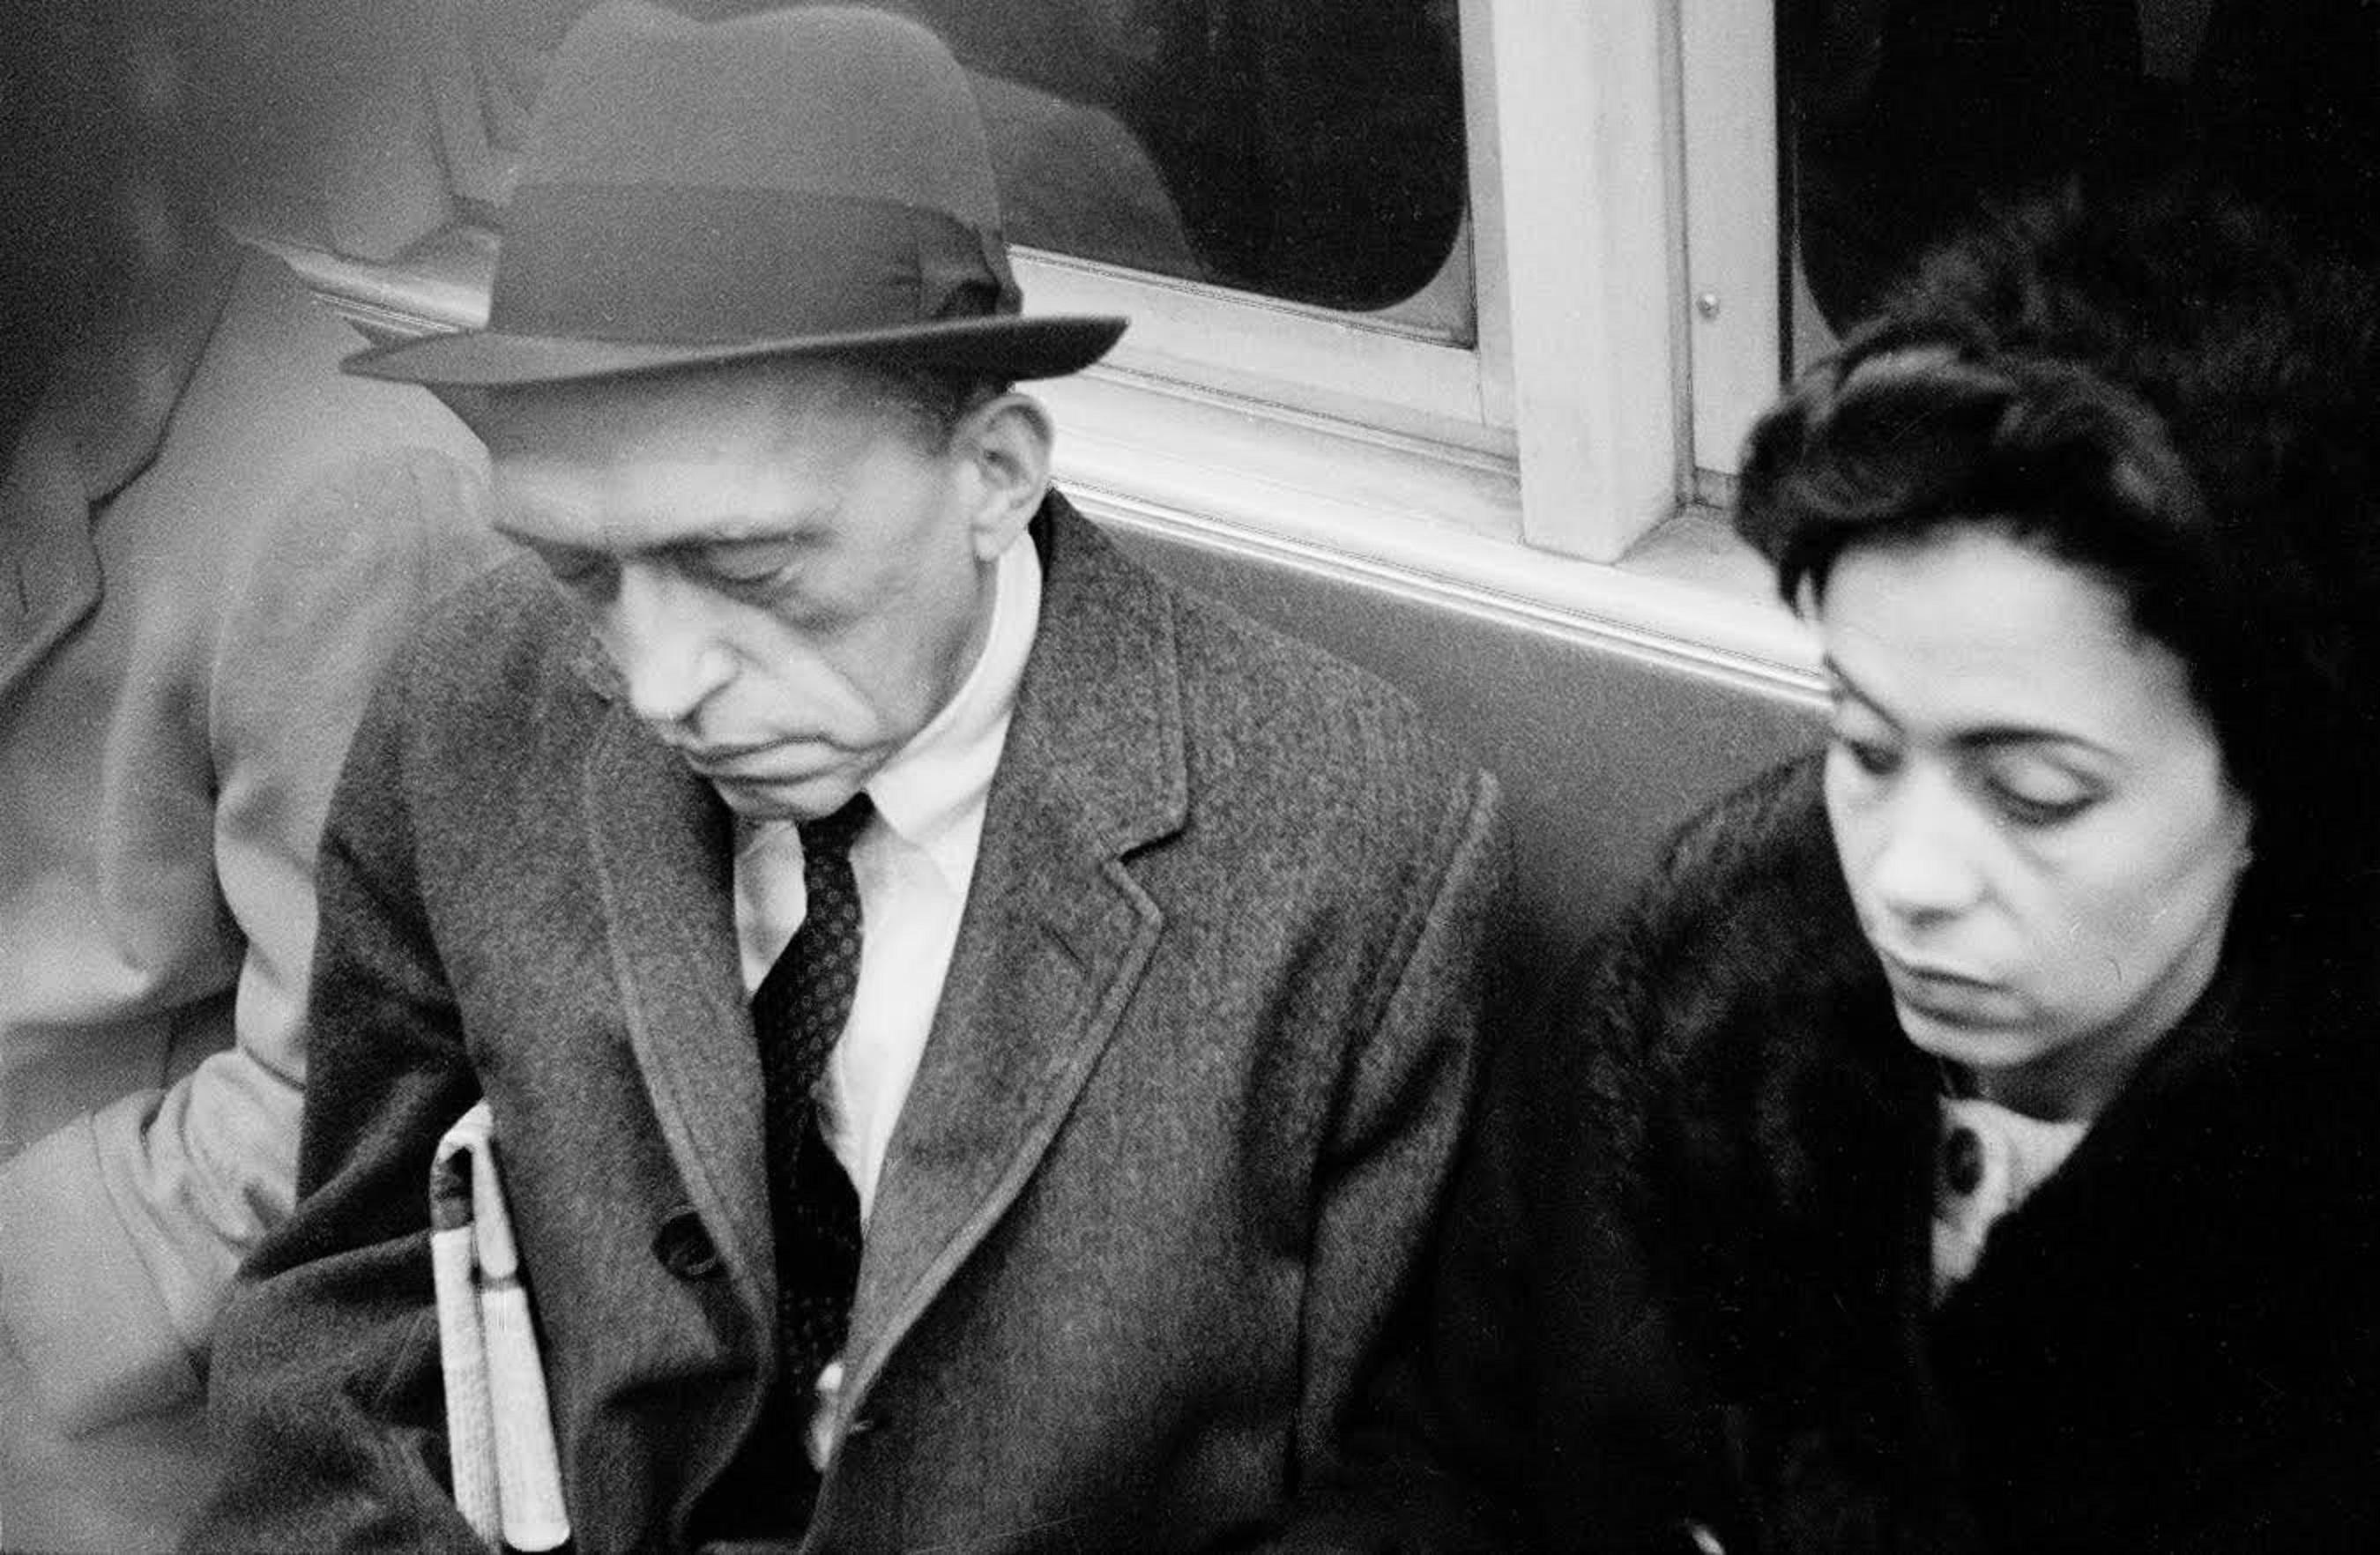 Peter Emanuel Goldman Figurative Photograph - Photograph from Vintage Negative NYC 1960s Photo Peter Goldman Subway Ride